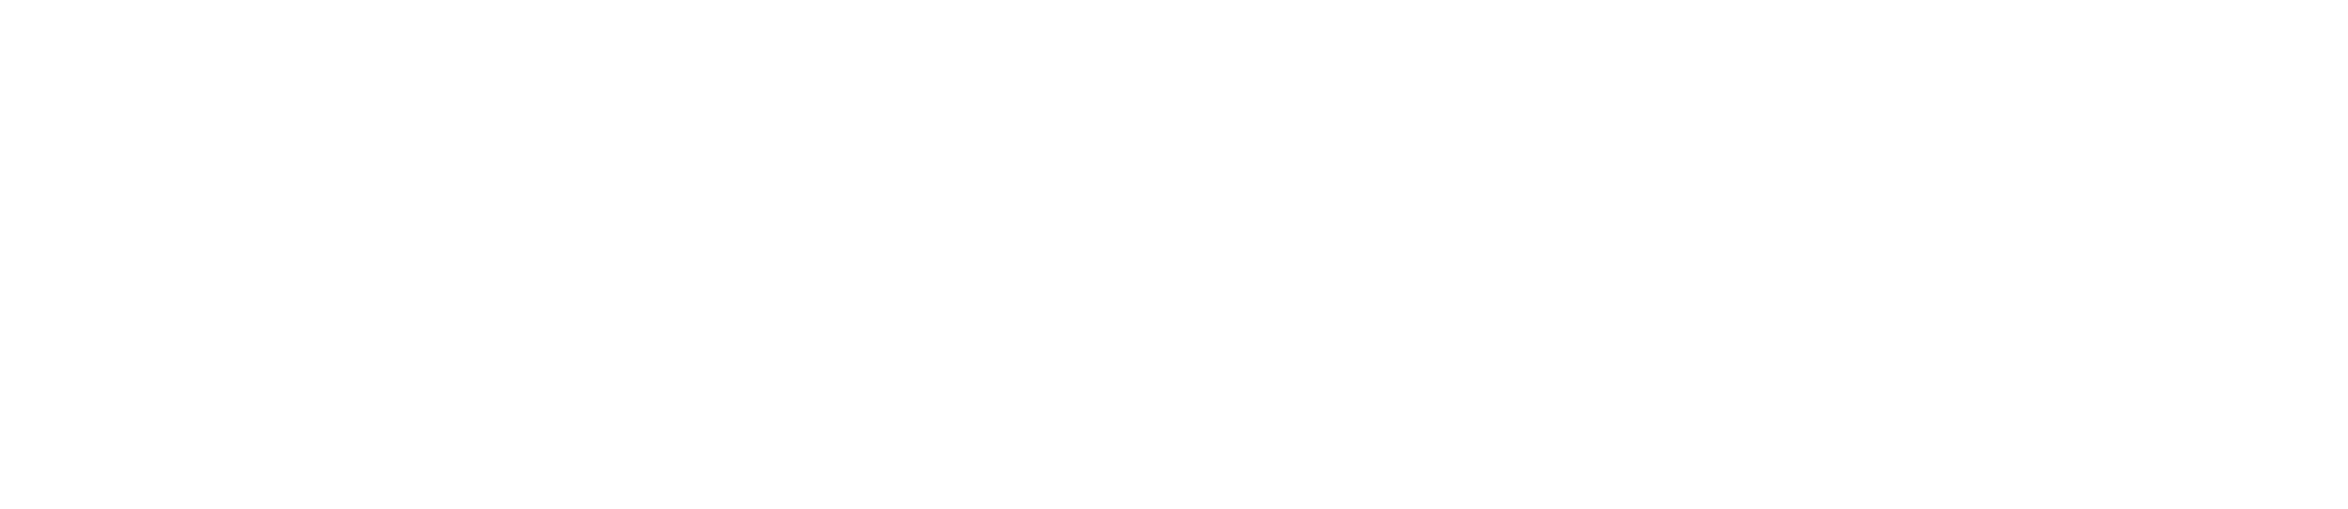 Martin Meier Baufamilie